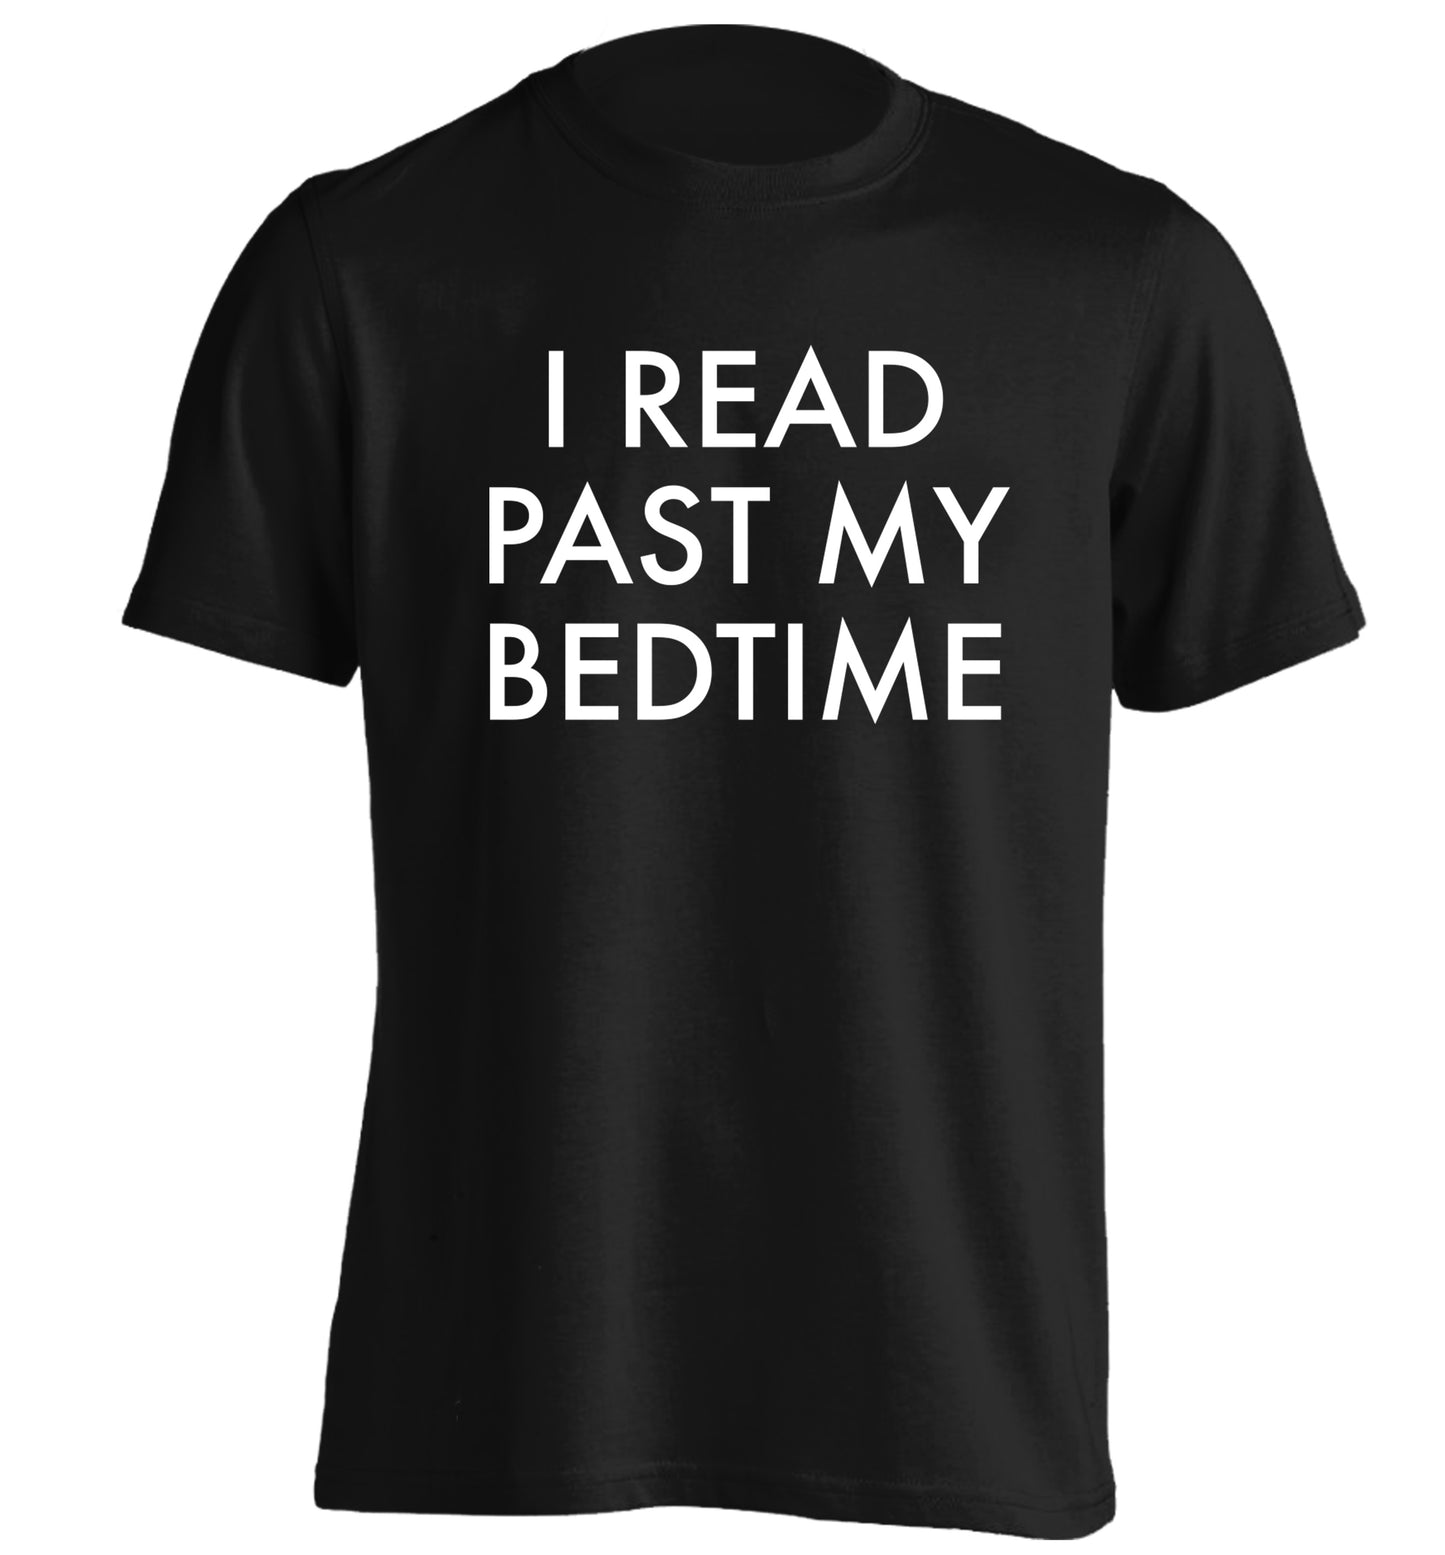 I read past my bedtime adults unisex black Tshirt 2XL